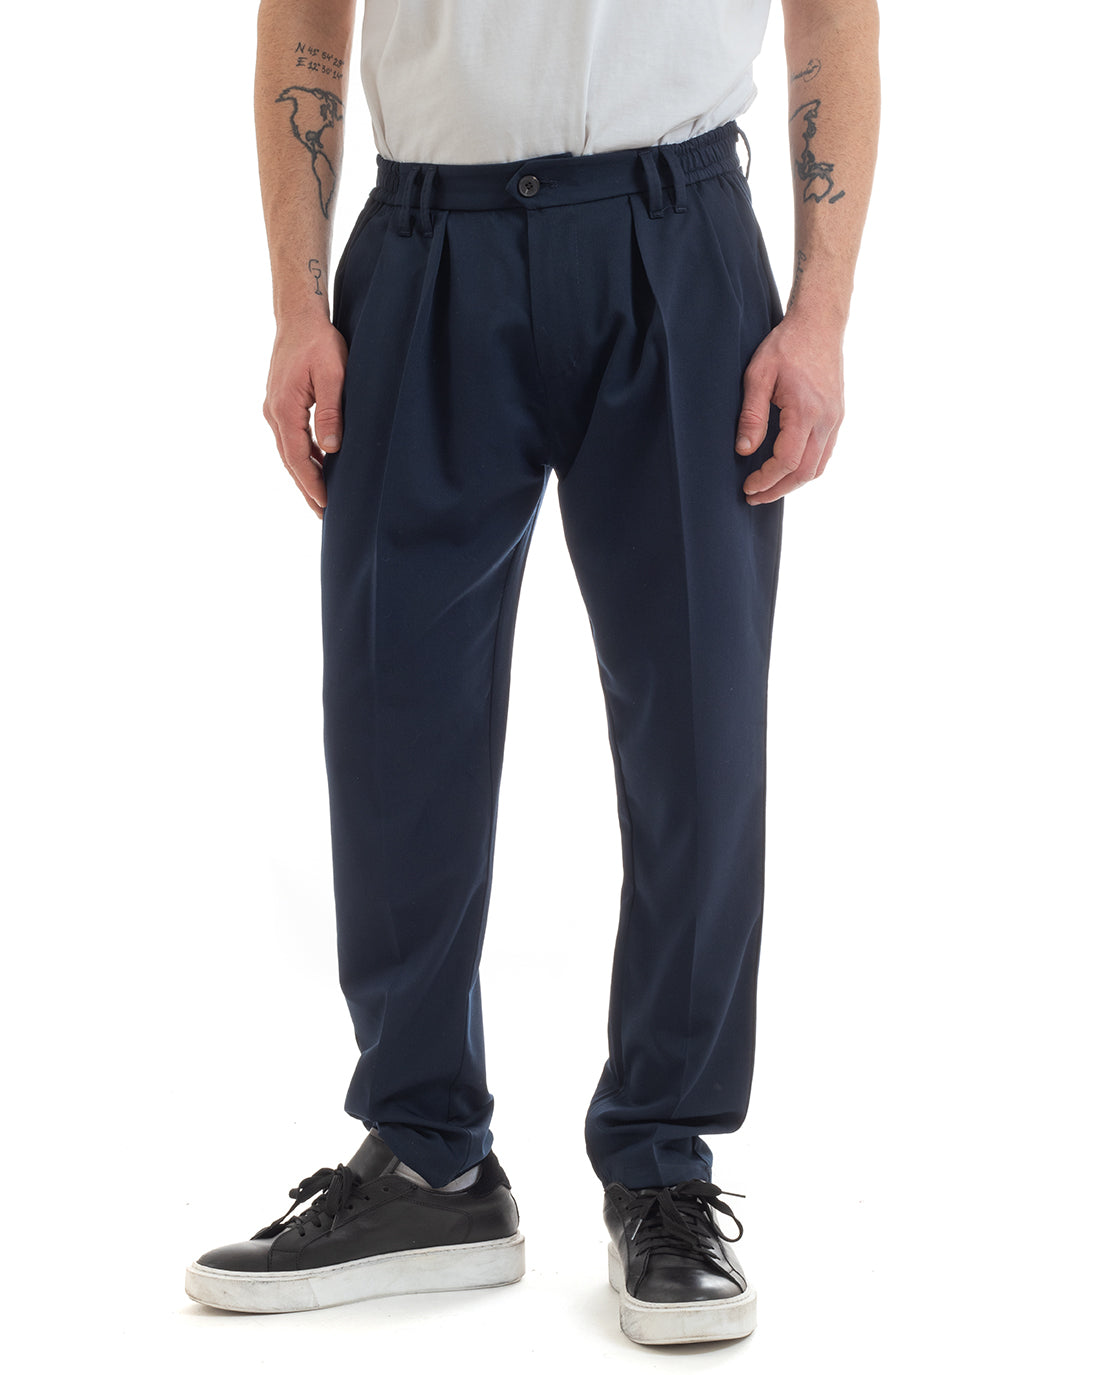 Pantaloni Uomo Pantalaccio Comodo Viscosa Elastico Straight Fit Blu GIOSAL-P5648A